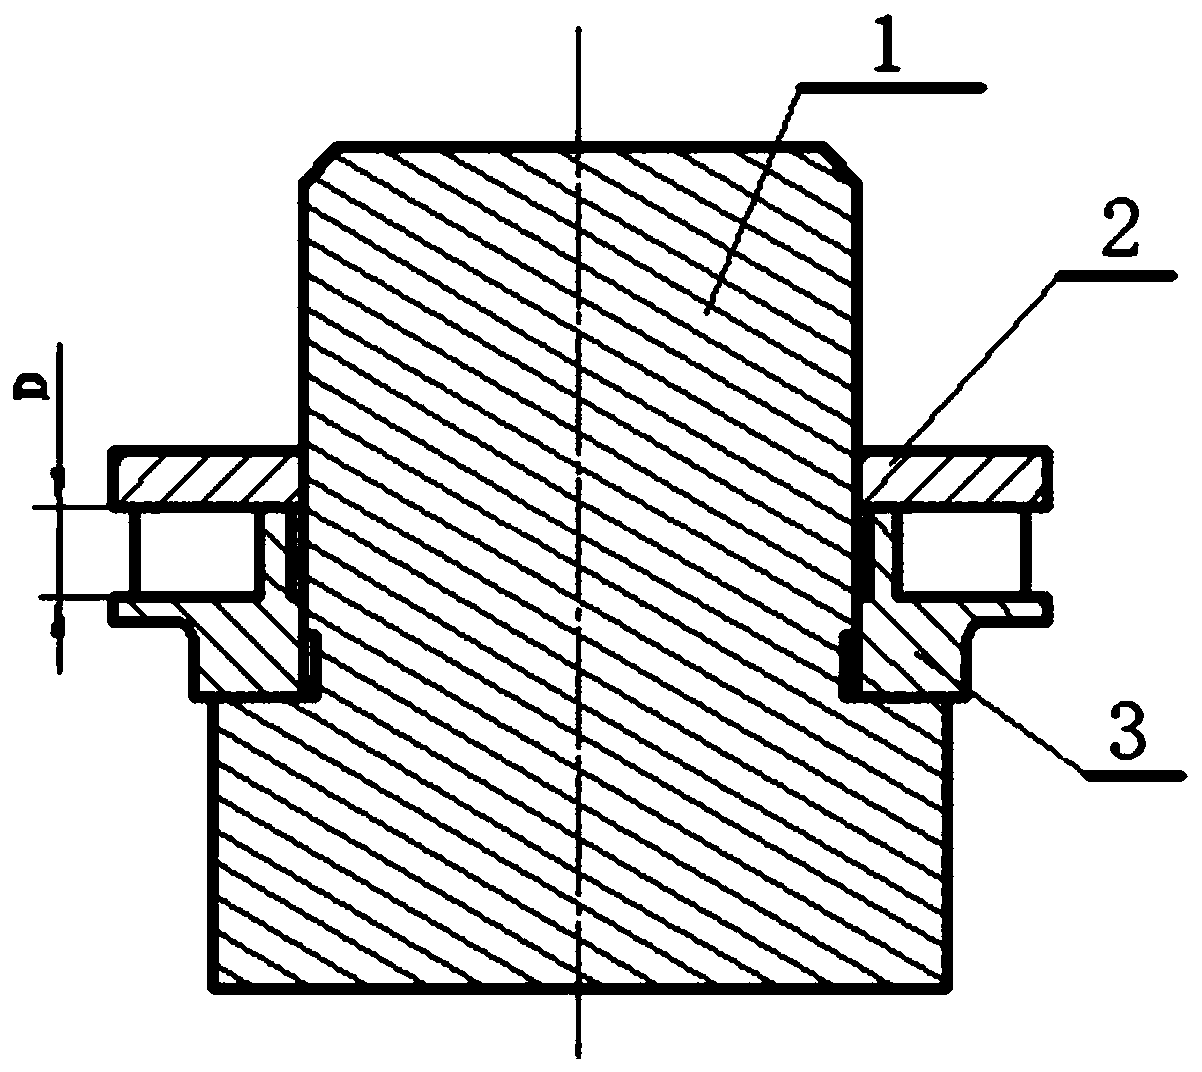 Method for processing swirler and method for validating air flow of swirler